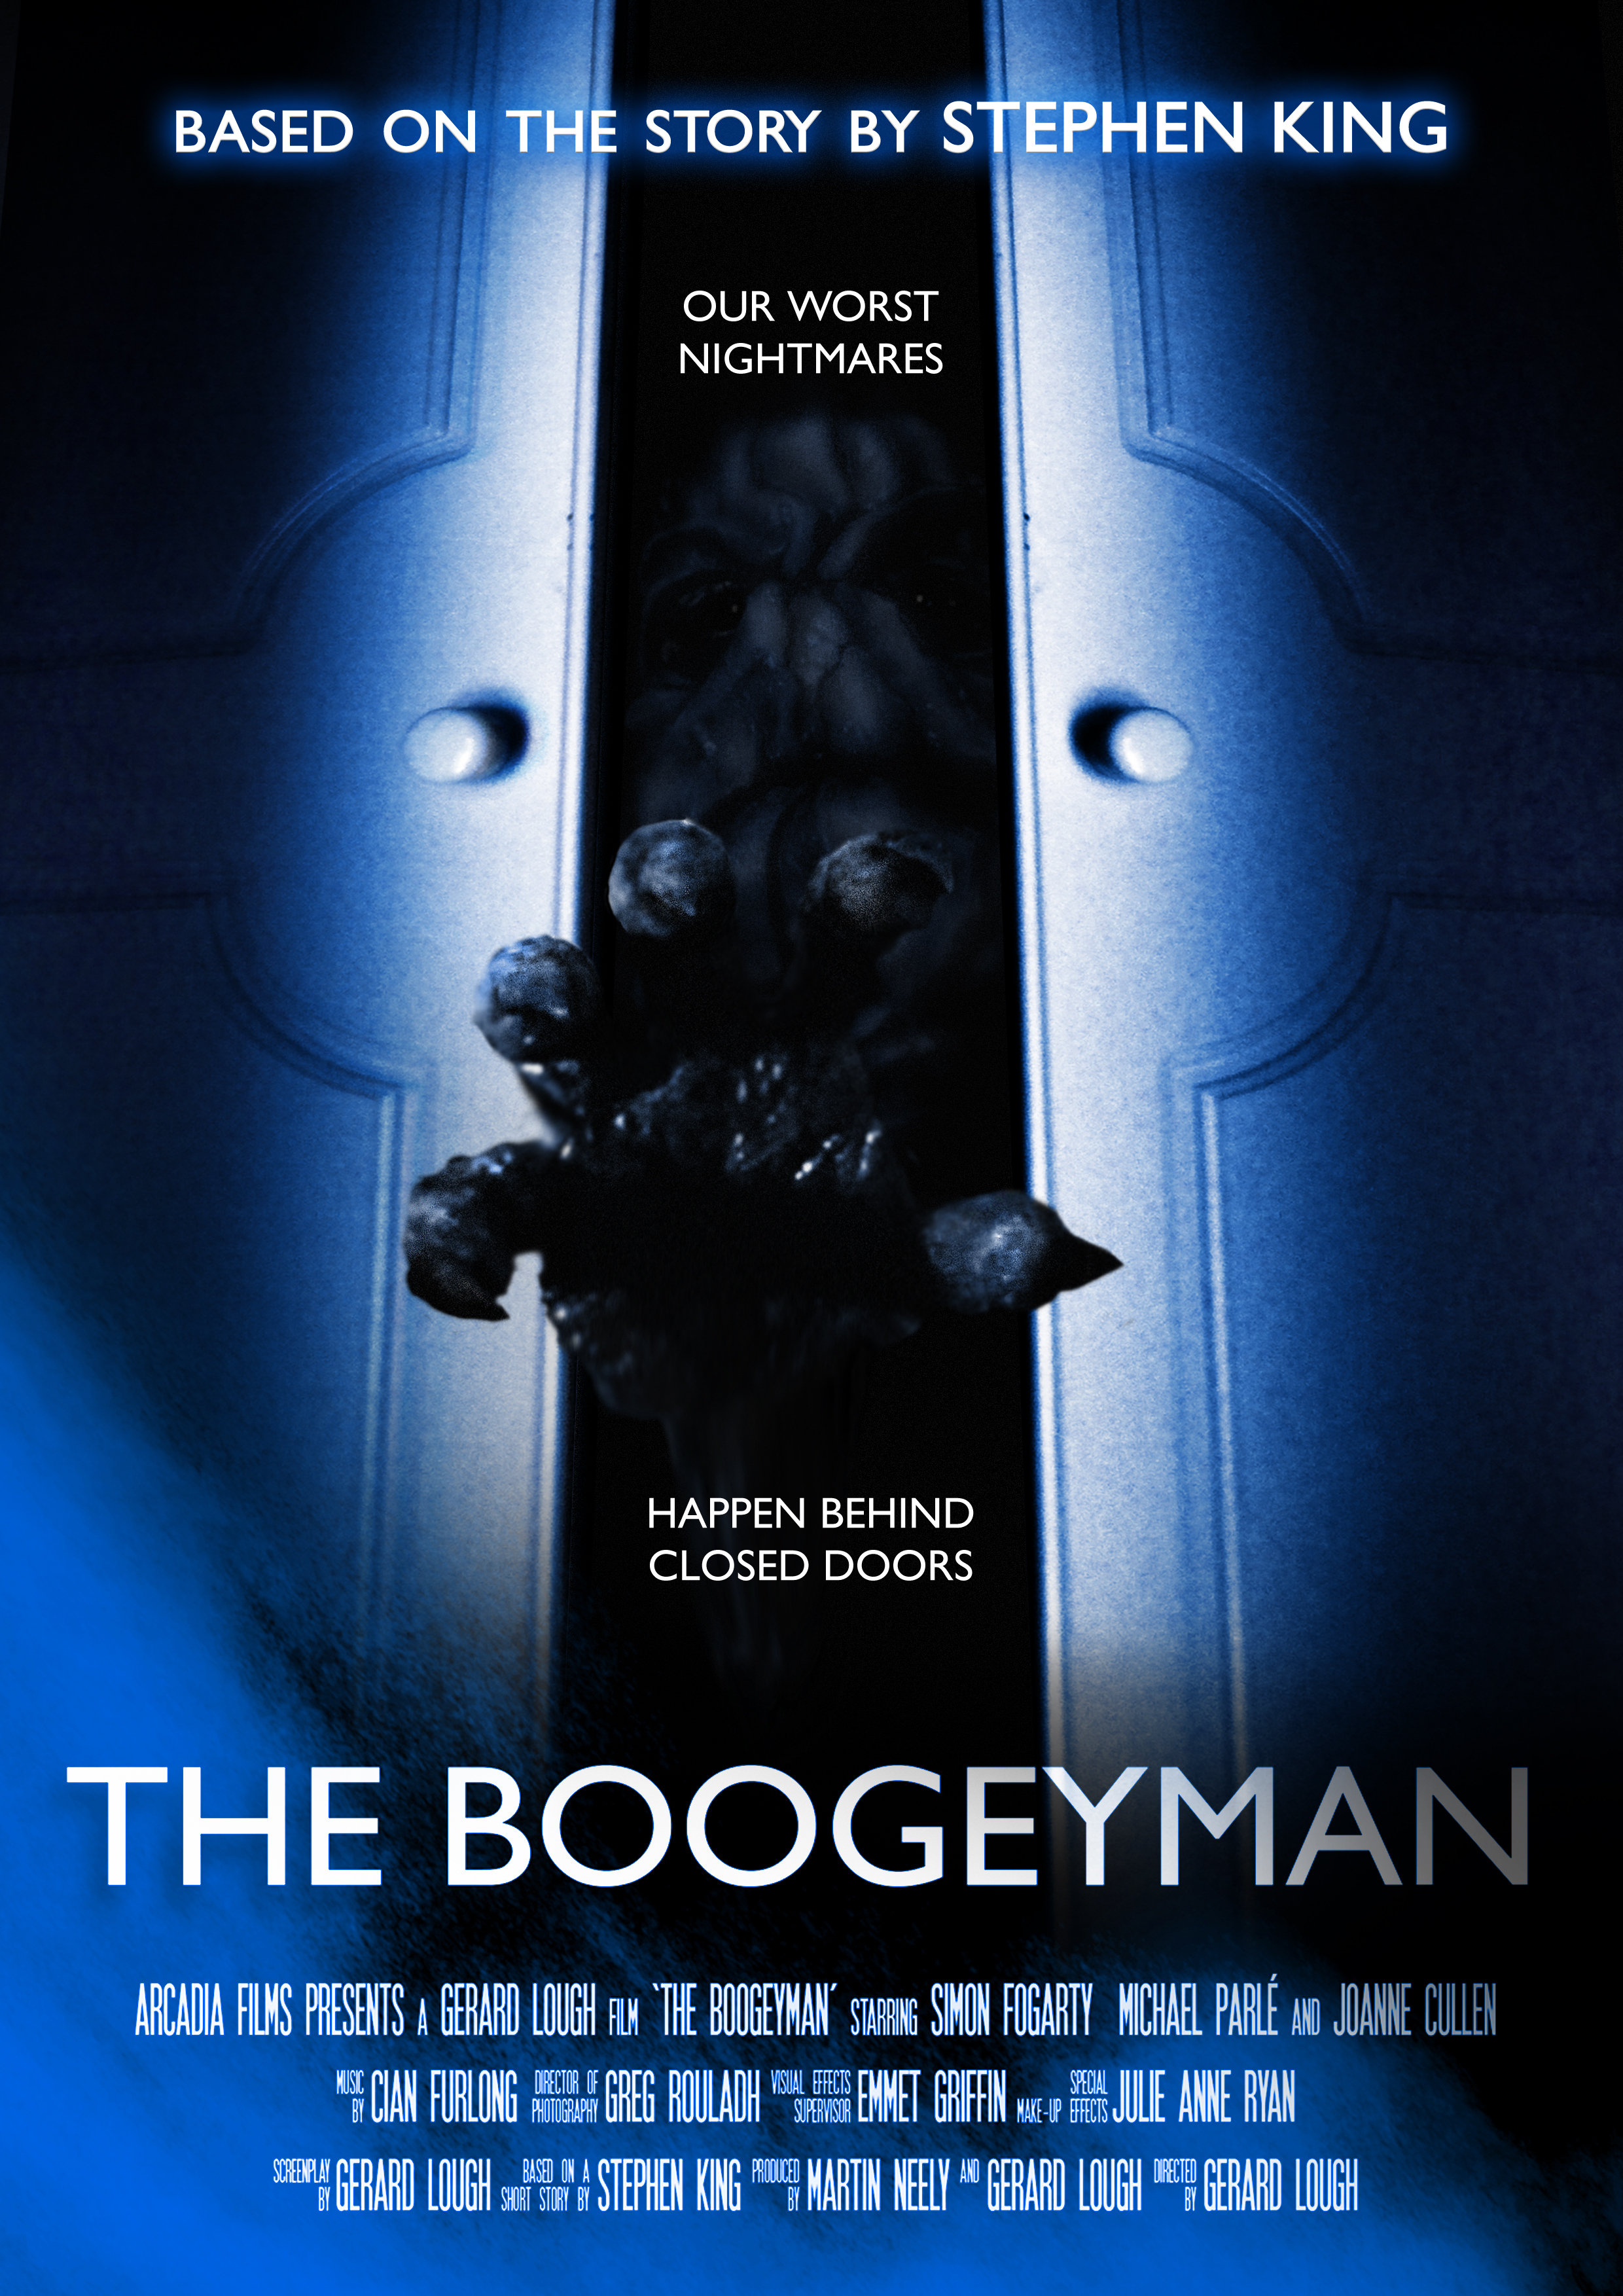 celeste marcum recommends The Boogeyman Full Movie